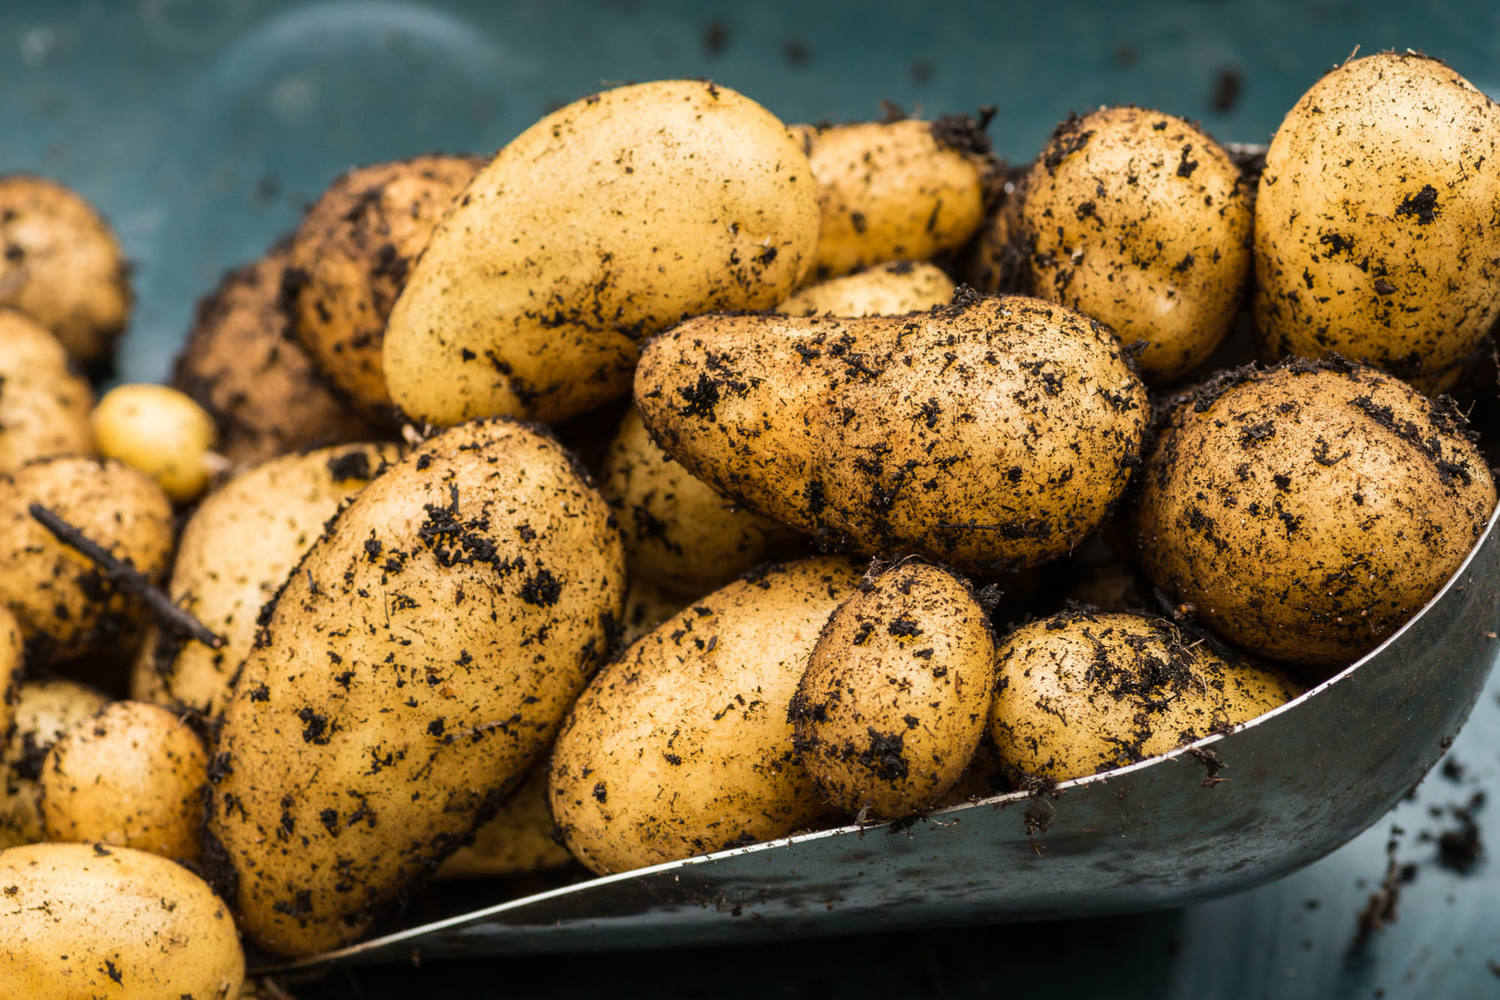 Charlotte aardappelen 1kg stuk 2